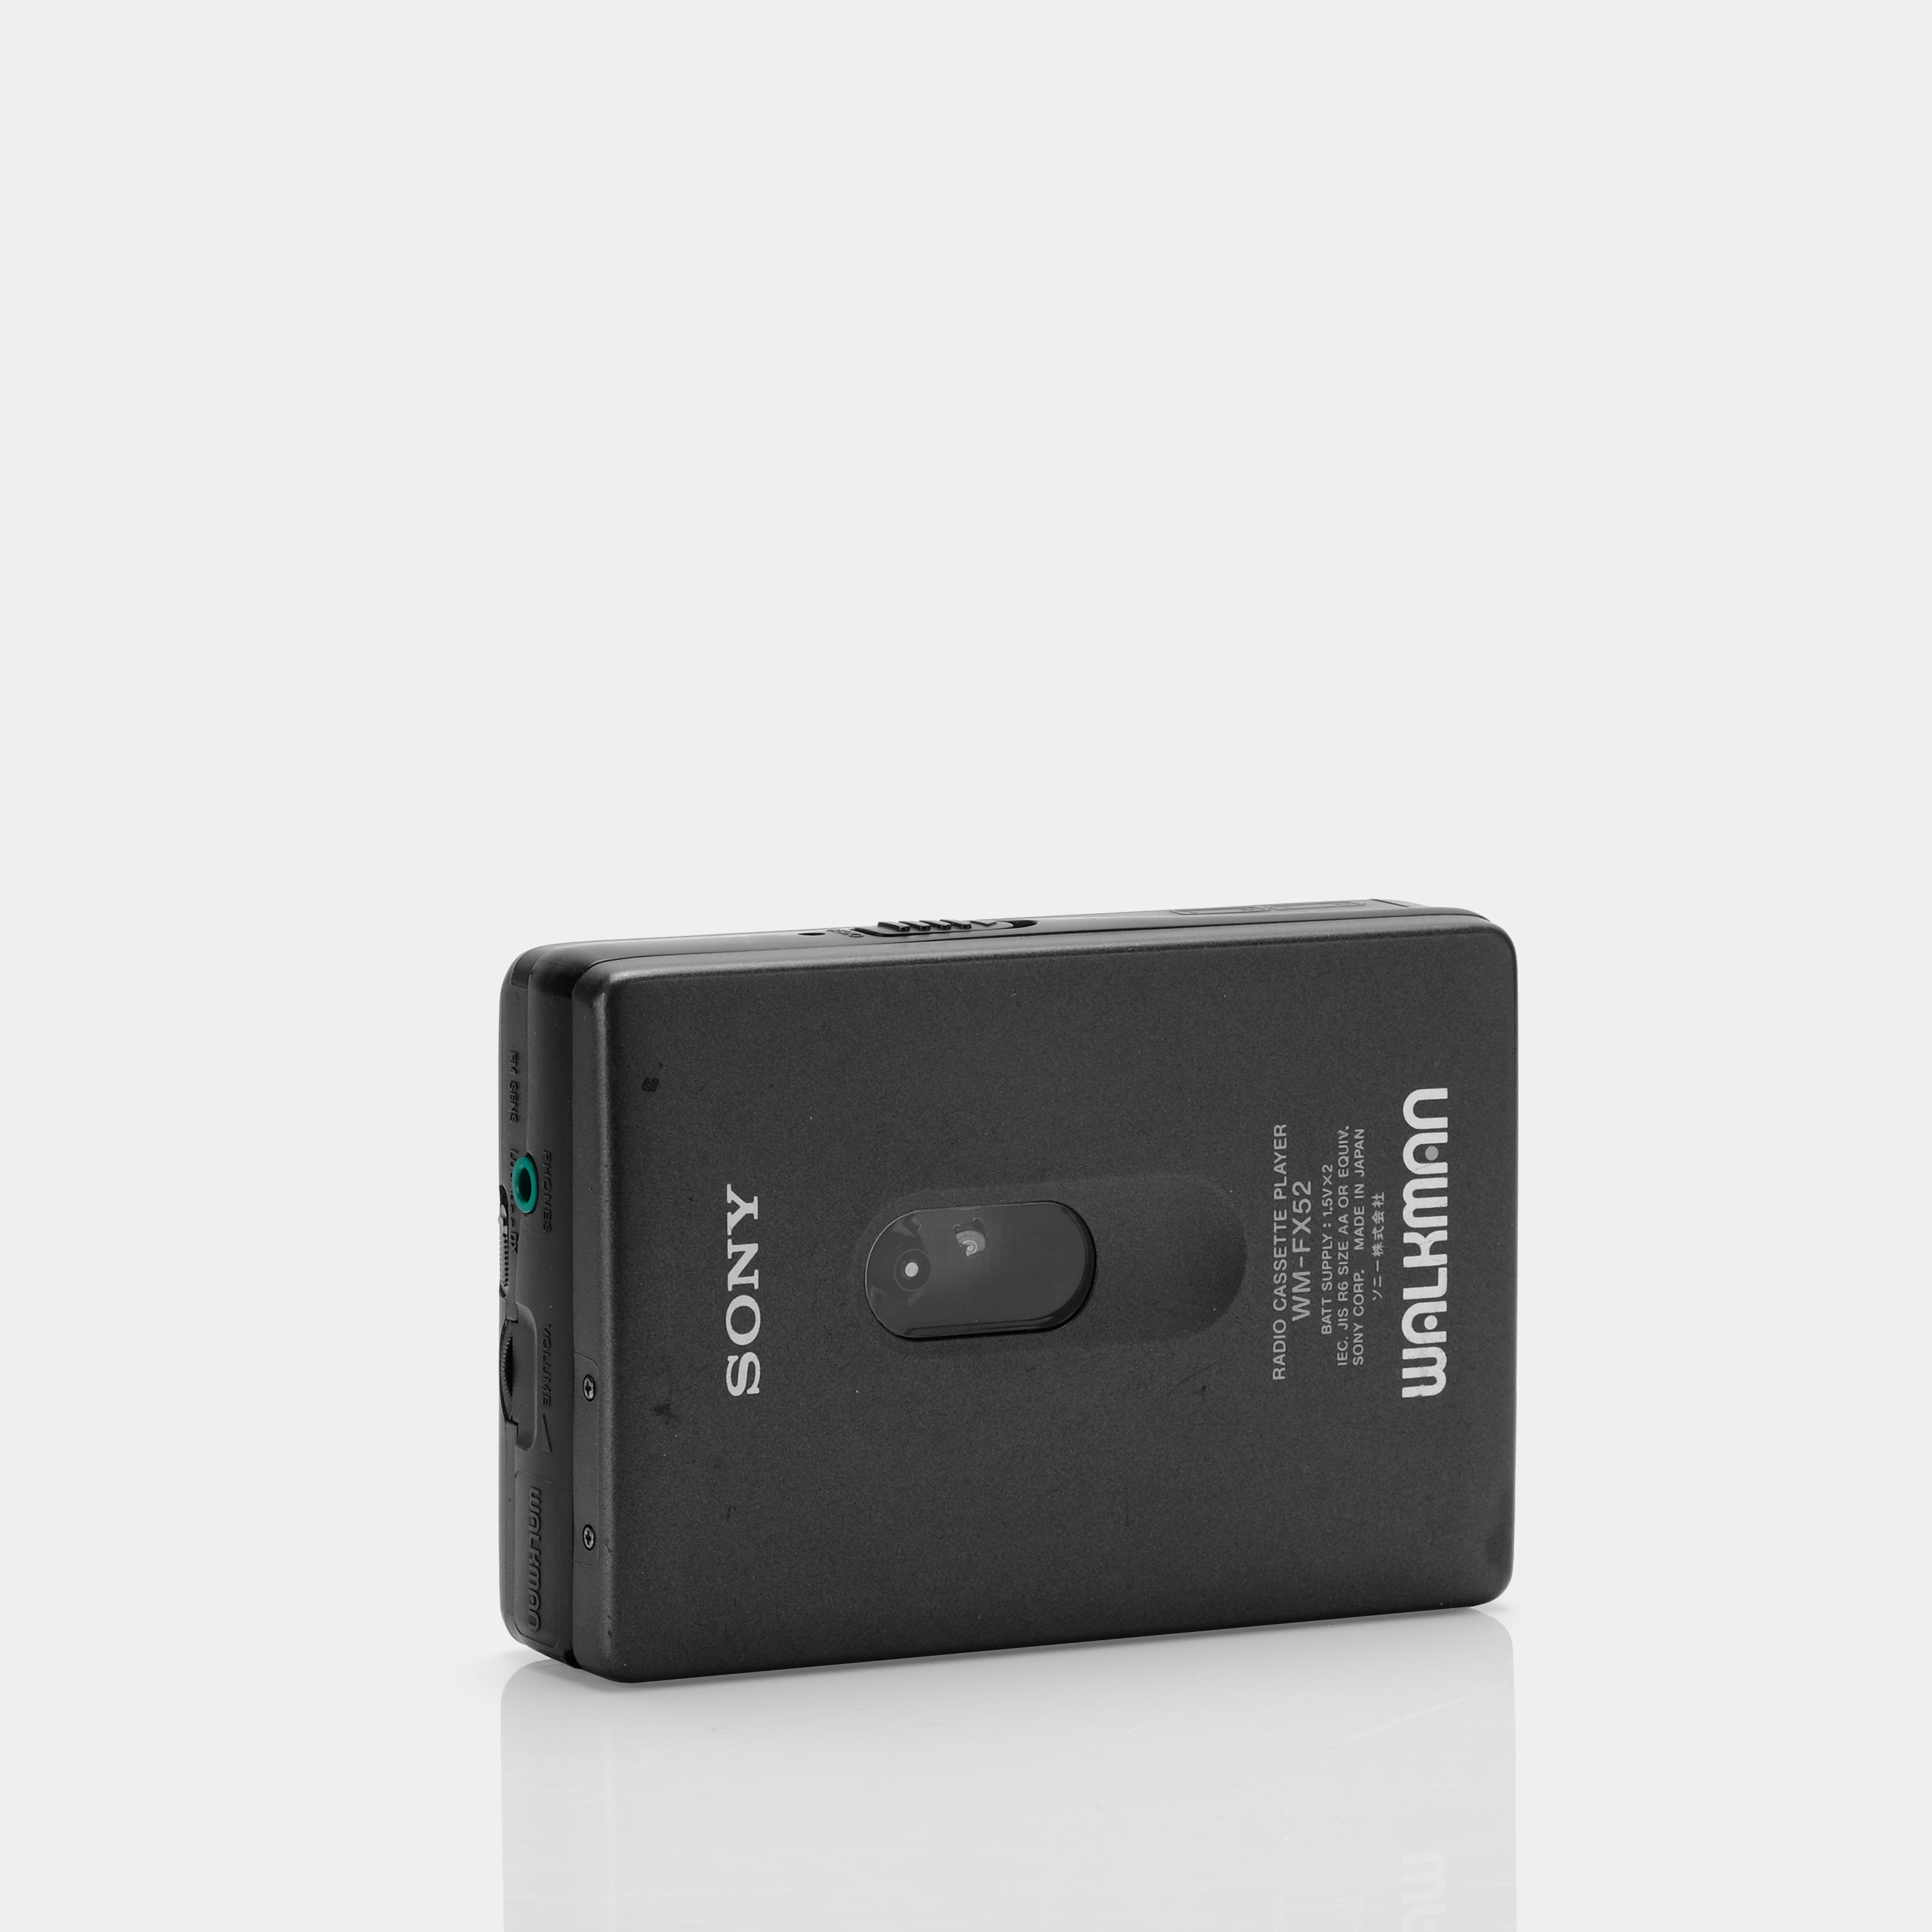 Sony Walkman WM-FX52 Portable Cassette Player